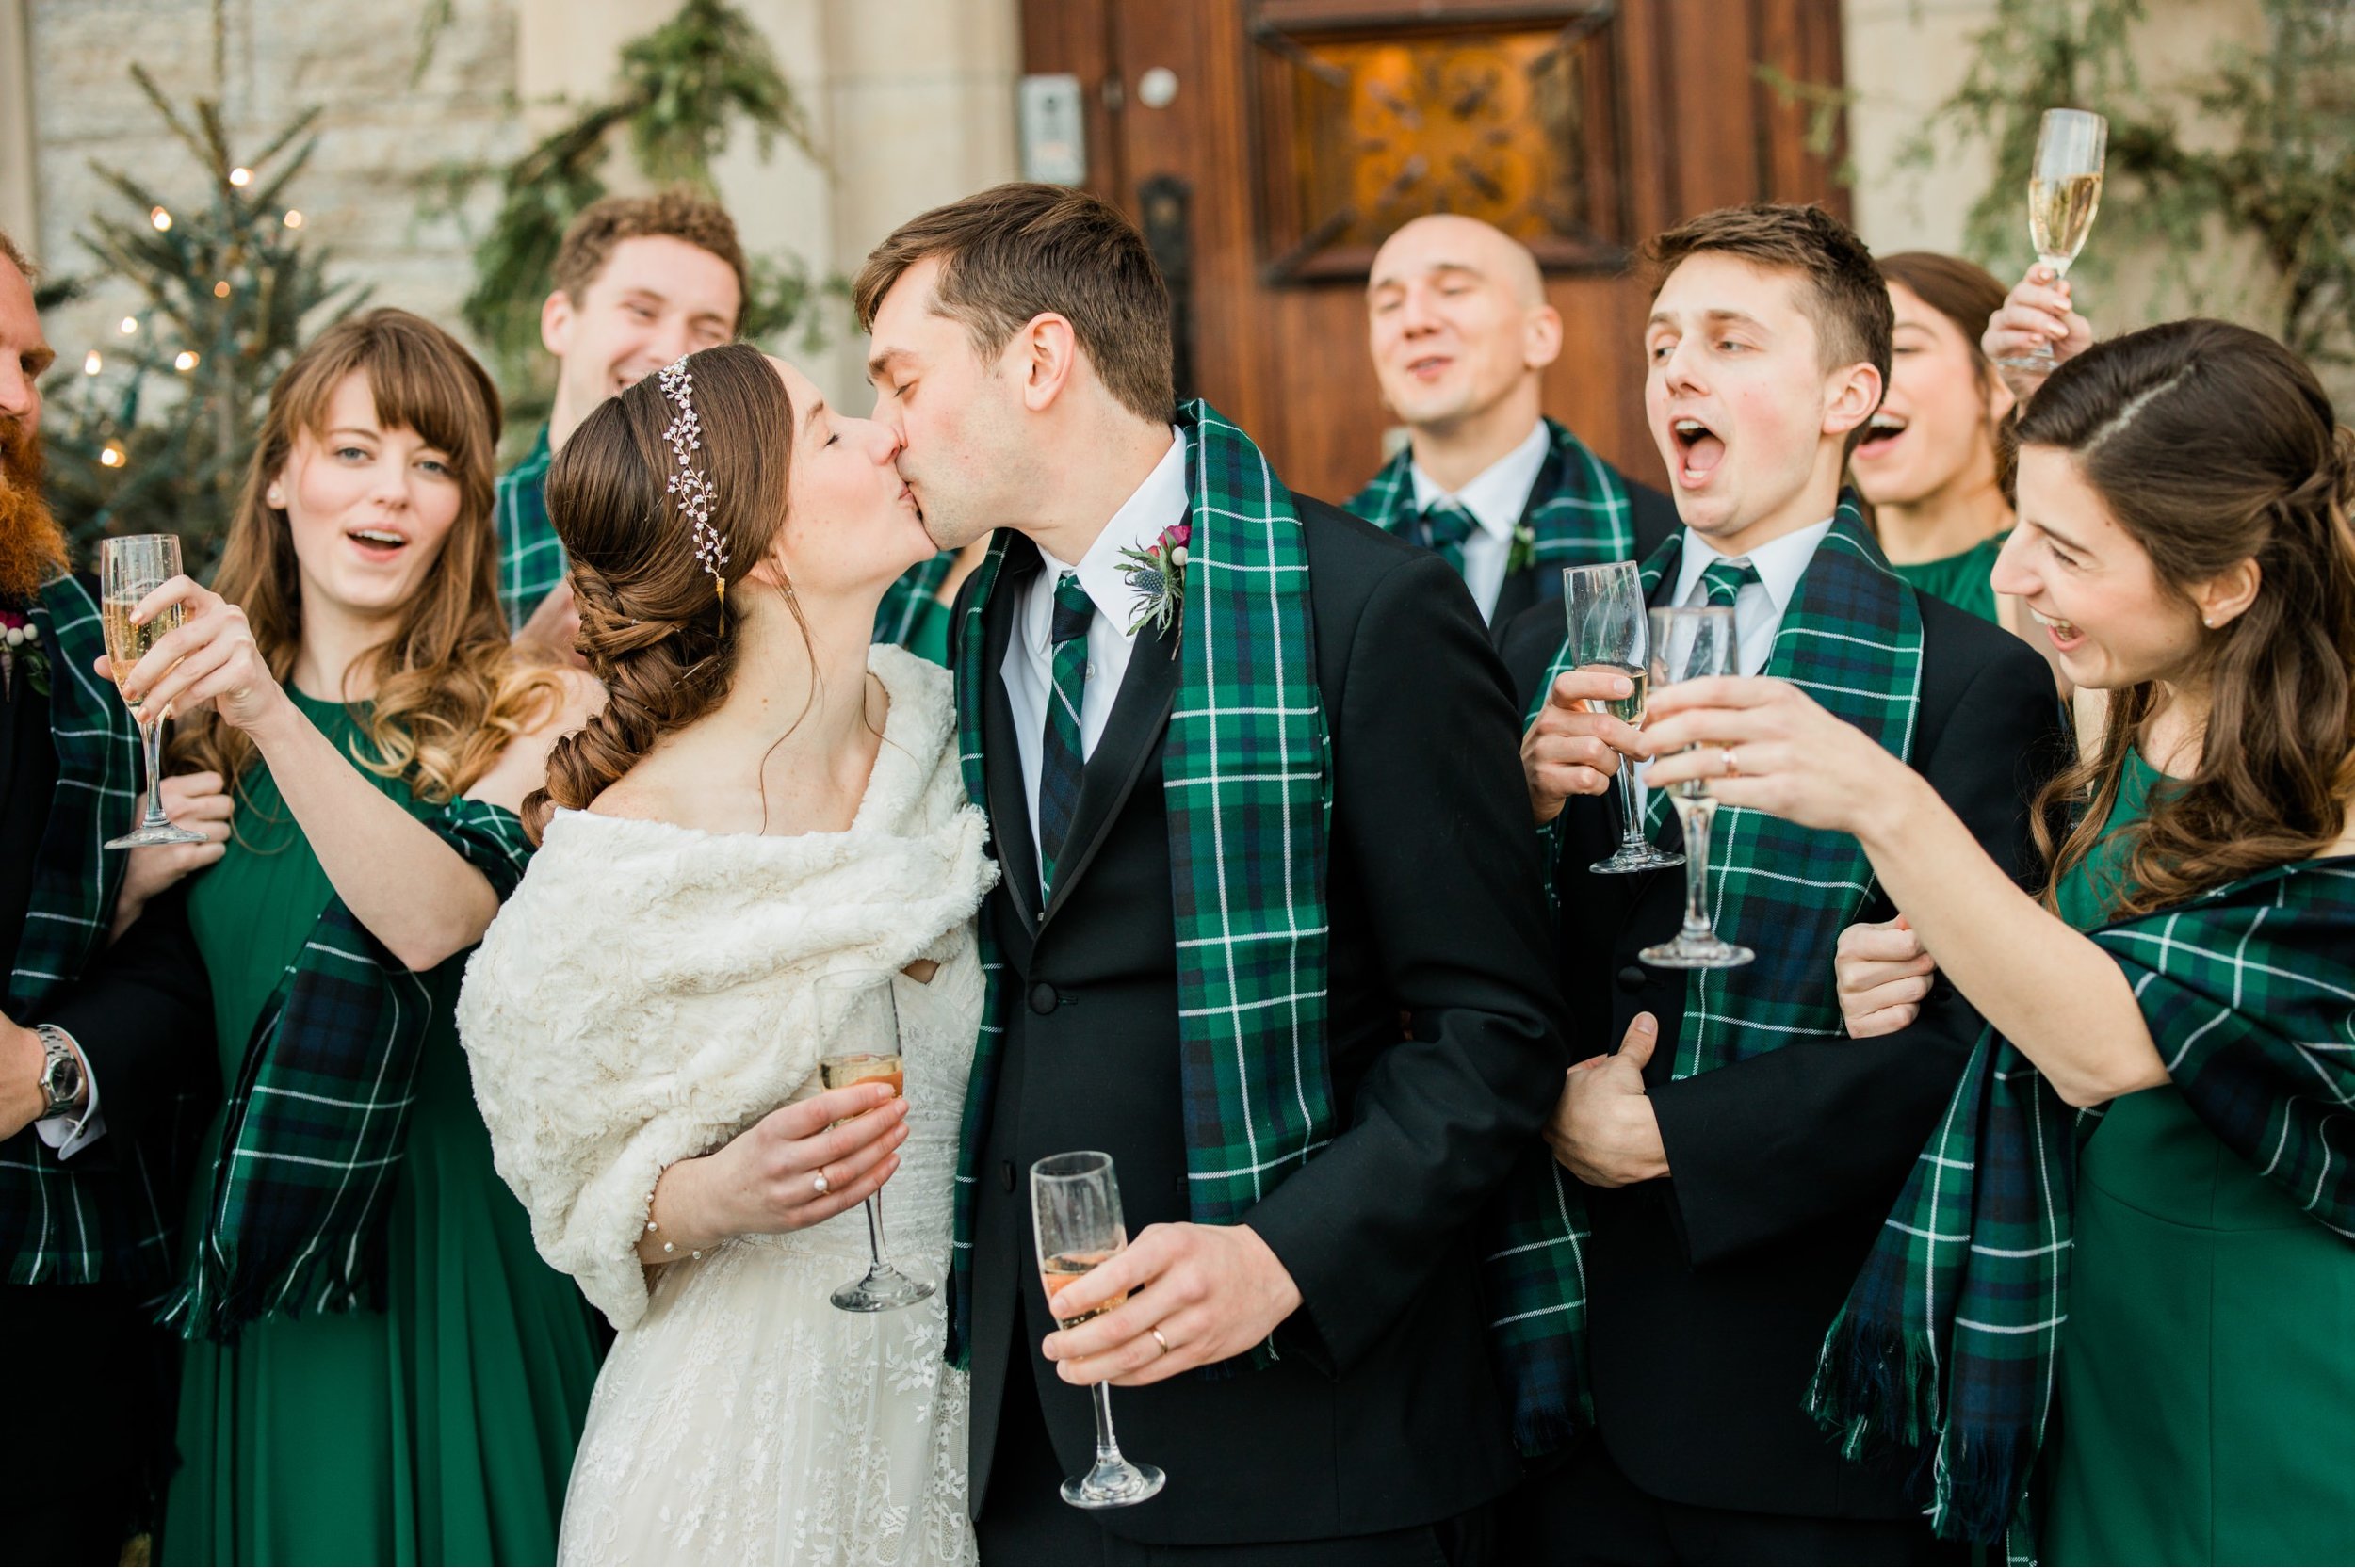 Scottish Winter Wedding at the Saint Paul College Club